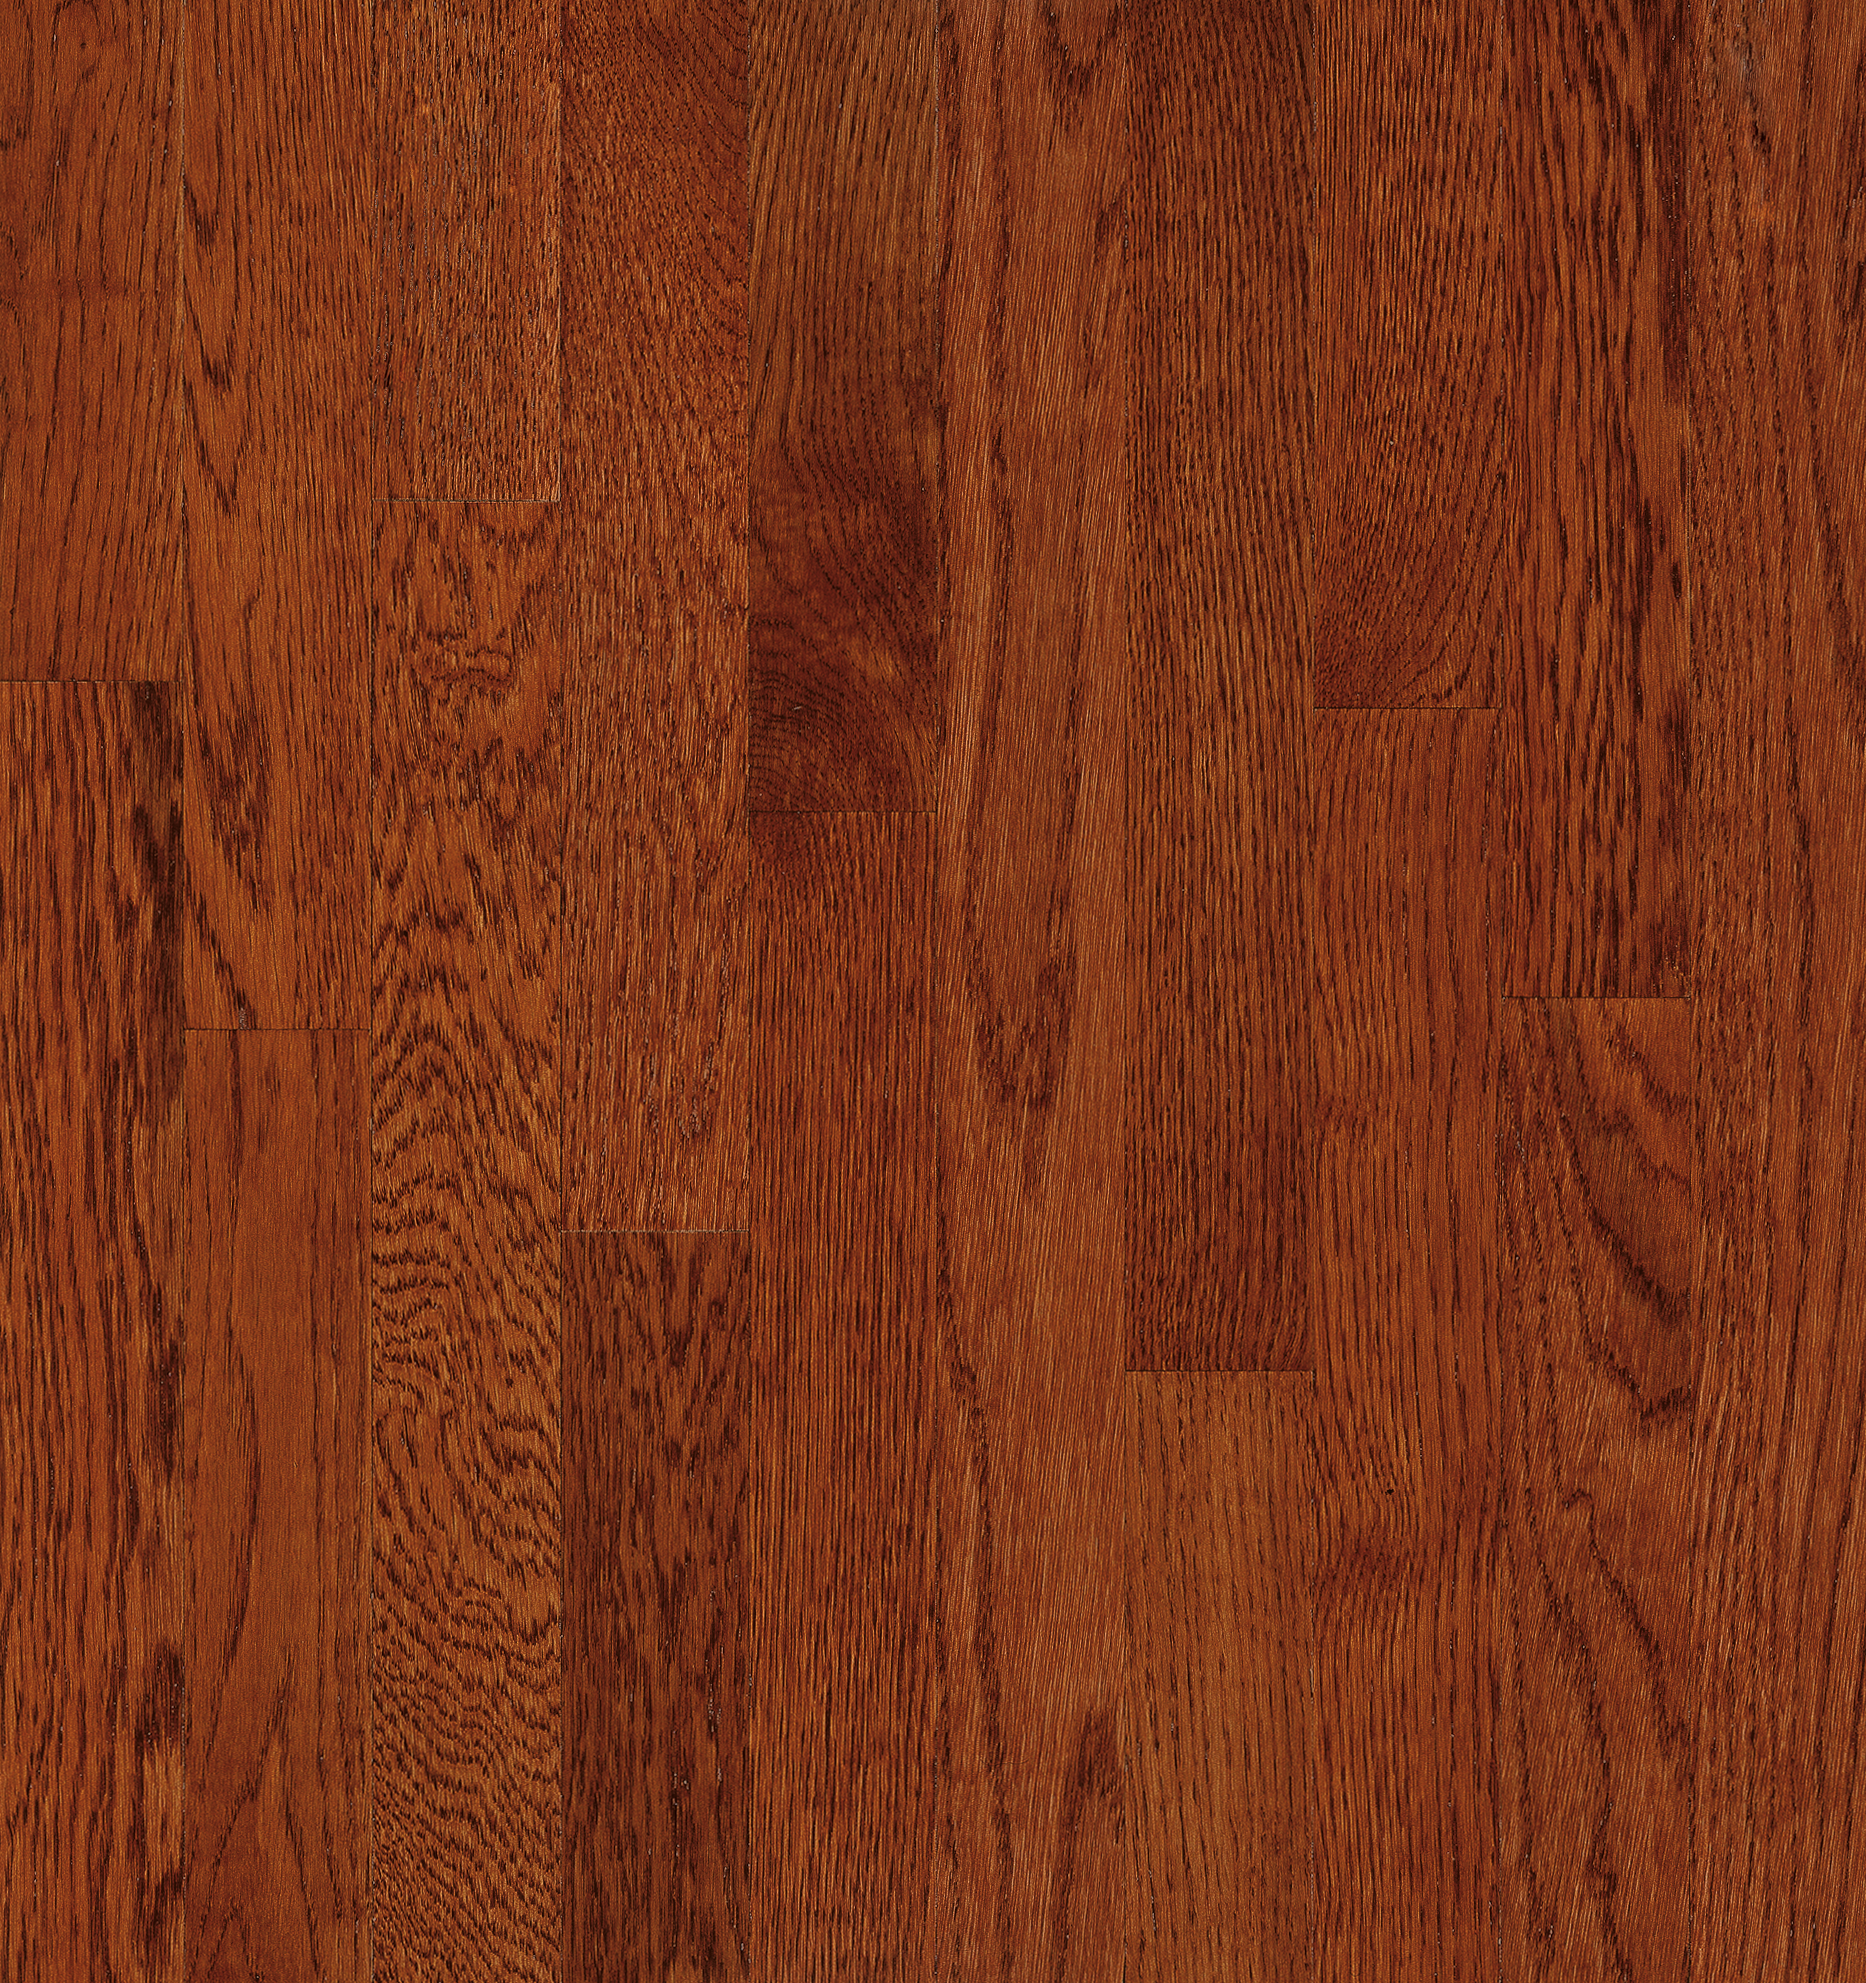 Amber 2 1 4 In Oak Solid Hardwood C5060, Bruce Hardwood Floor Polish